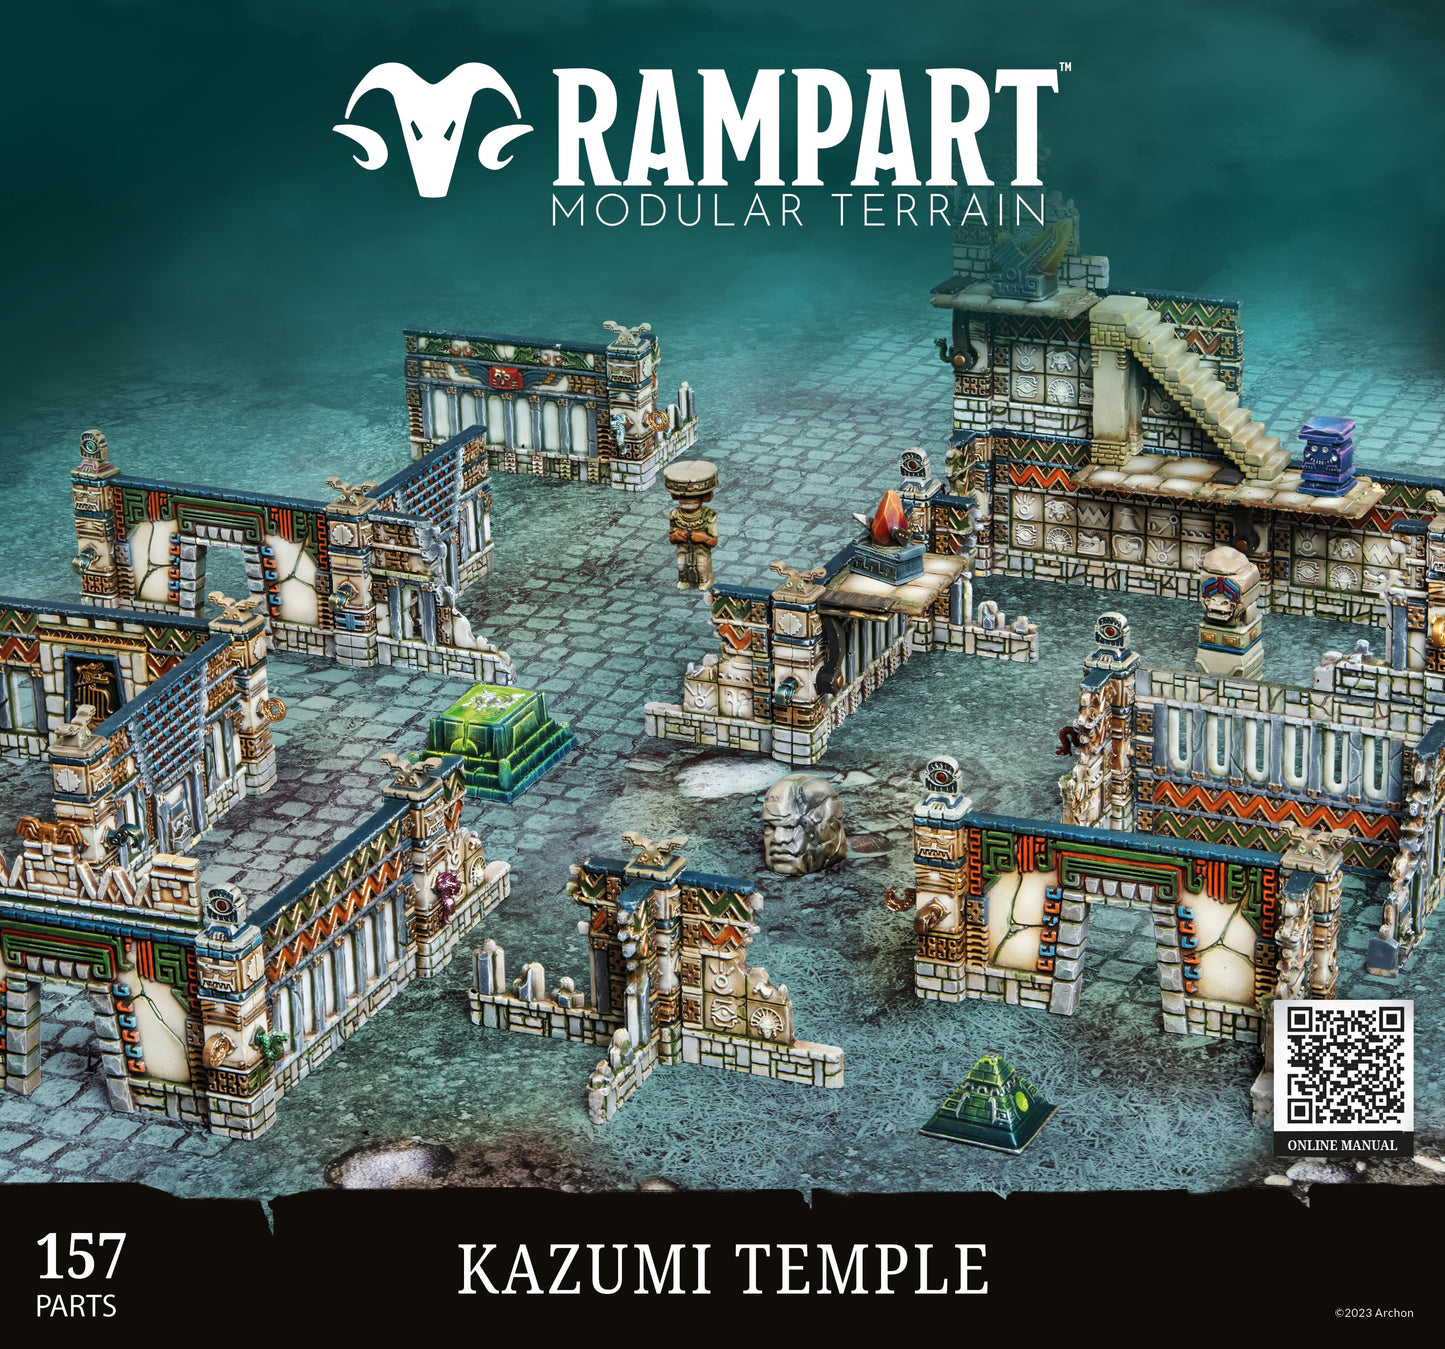 Kazumi Temple - Rampart Magnetic Modular Terrain